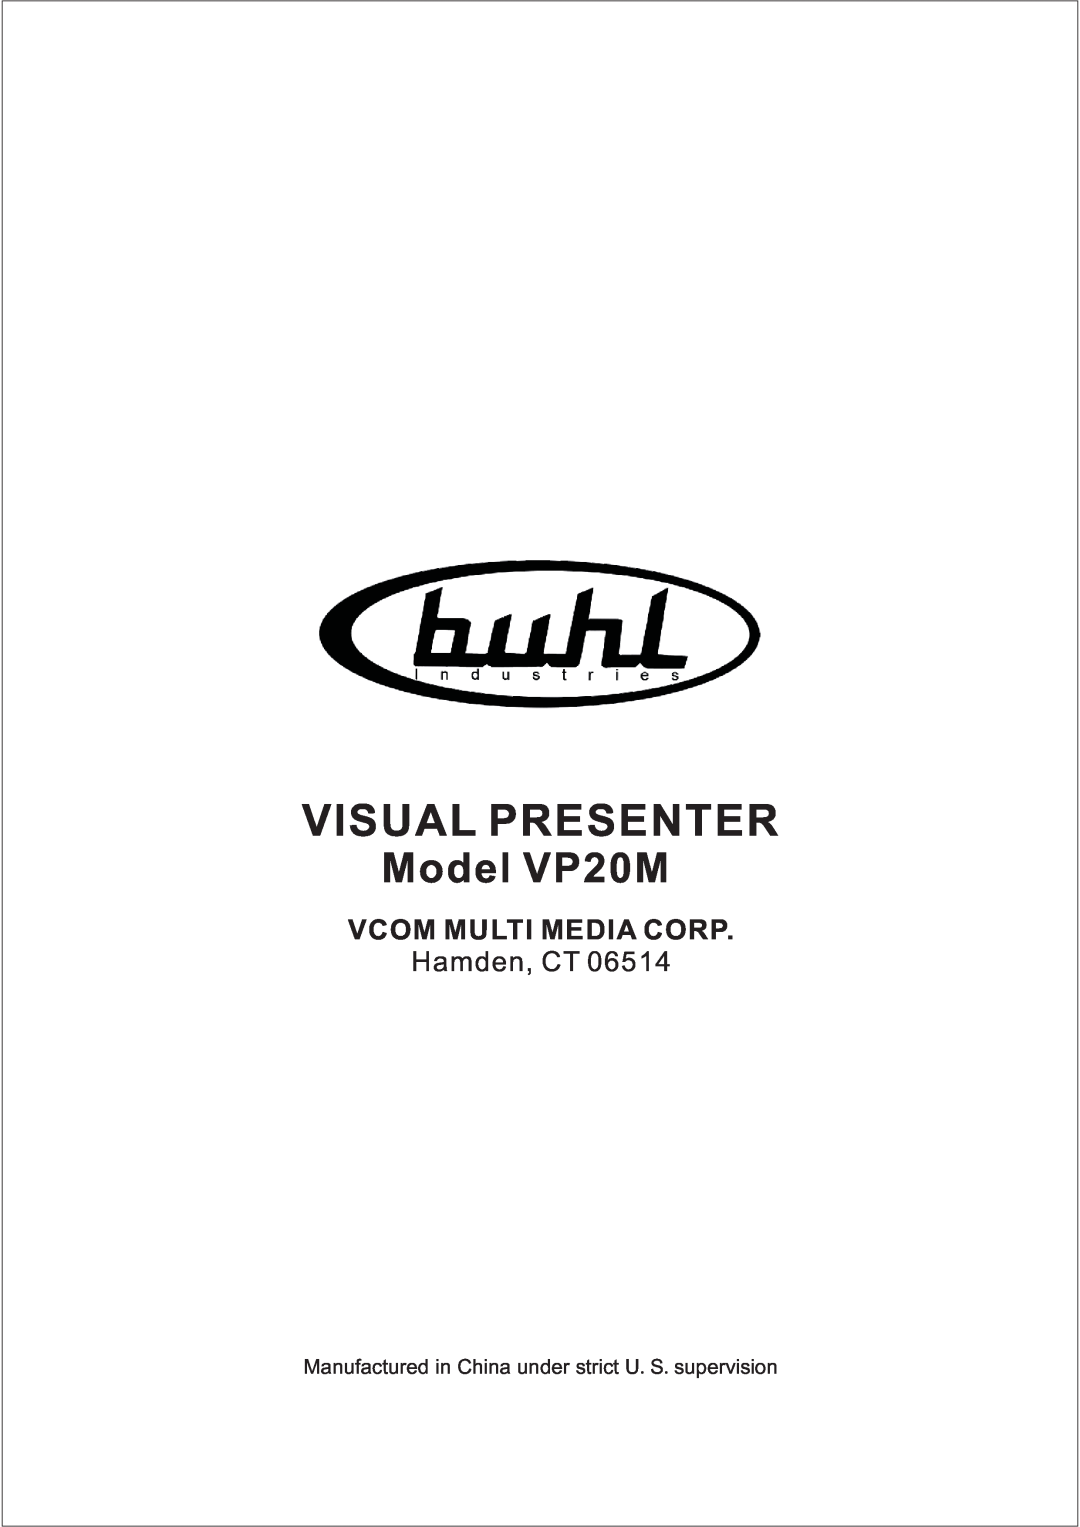 Buhl manual Visual Presenter, Model VP20M, Vcom Multi Media Corp, Hamden, CT 